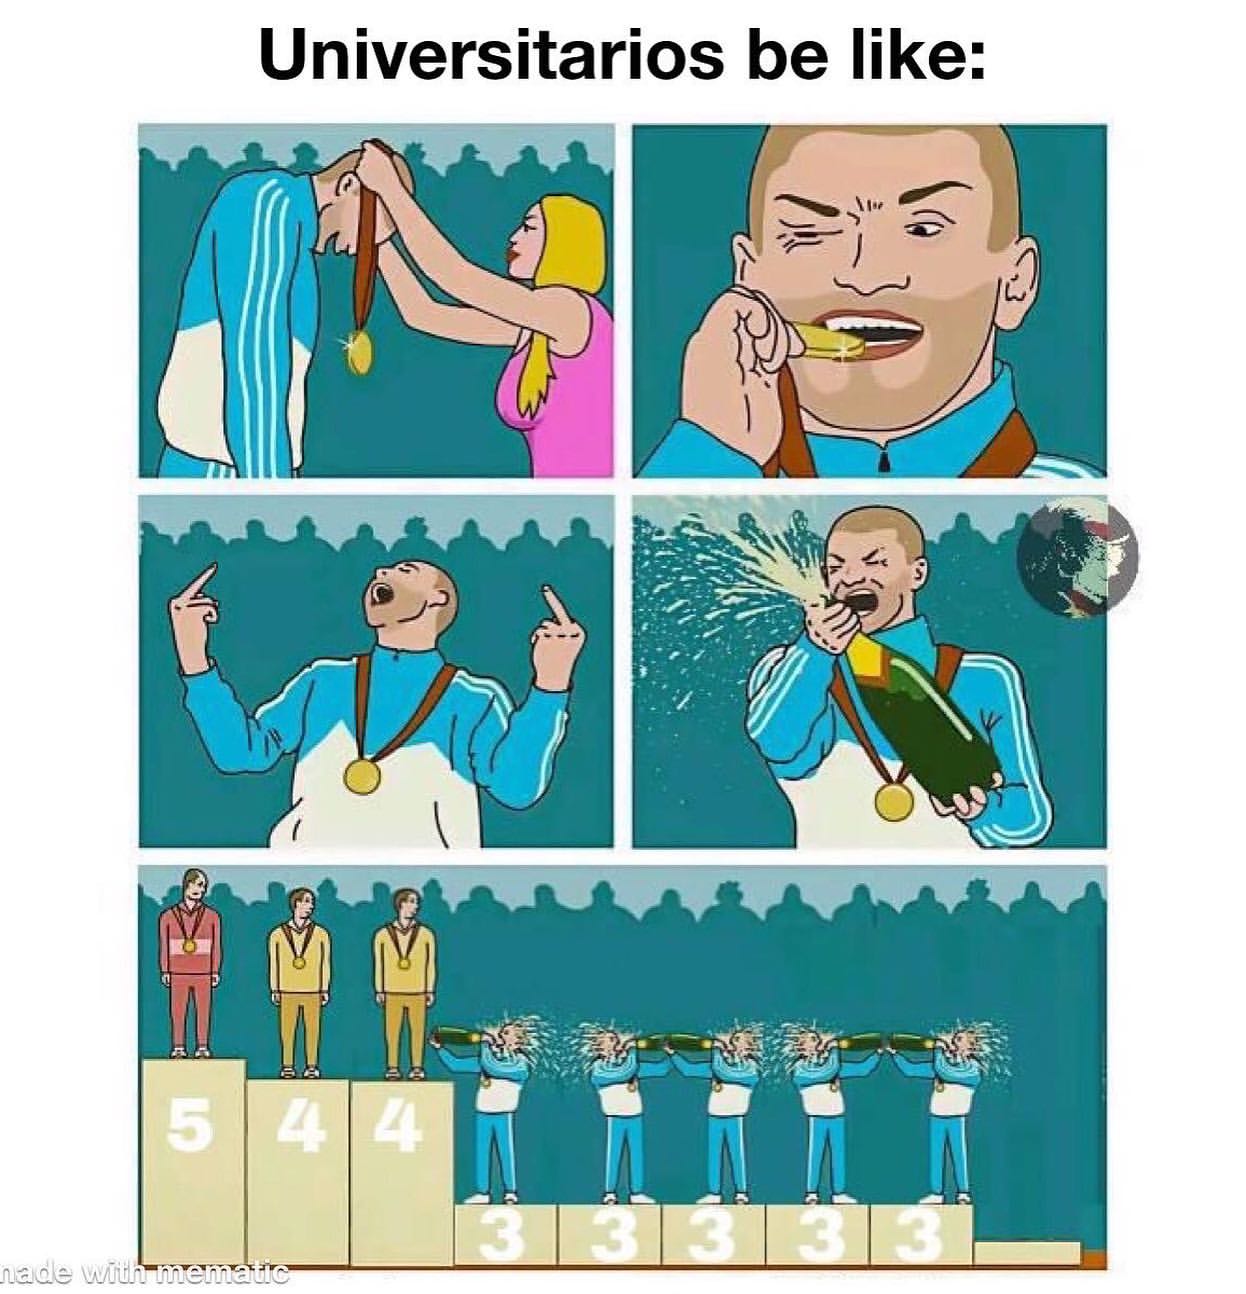 Universitarios be like: